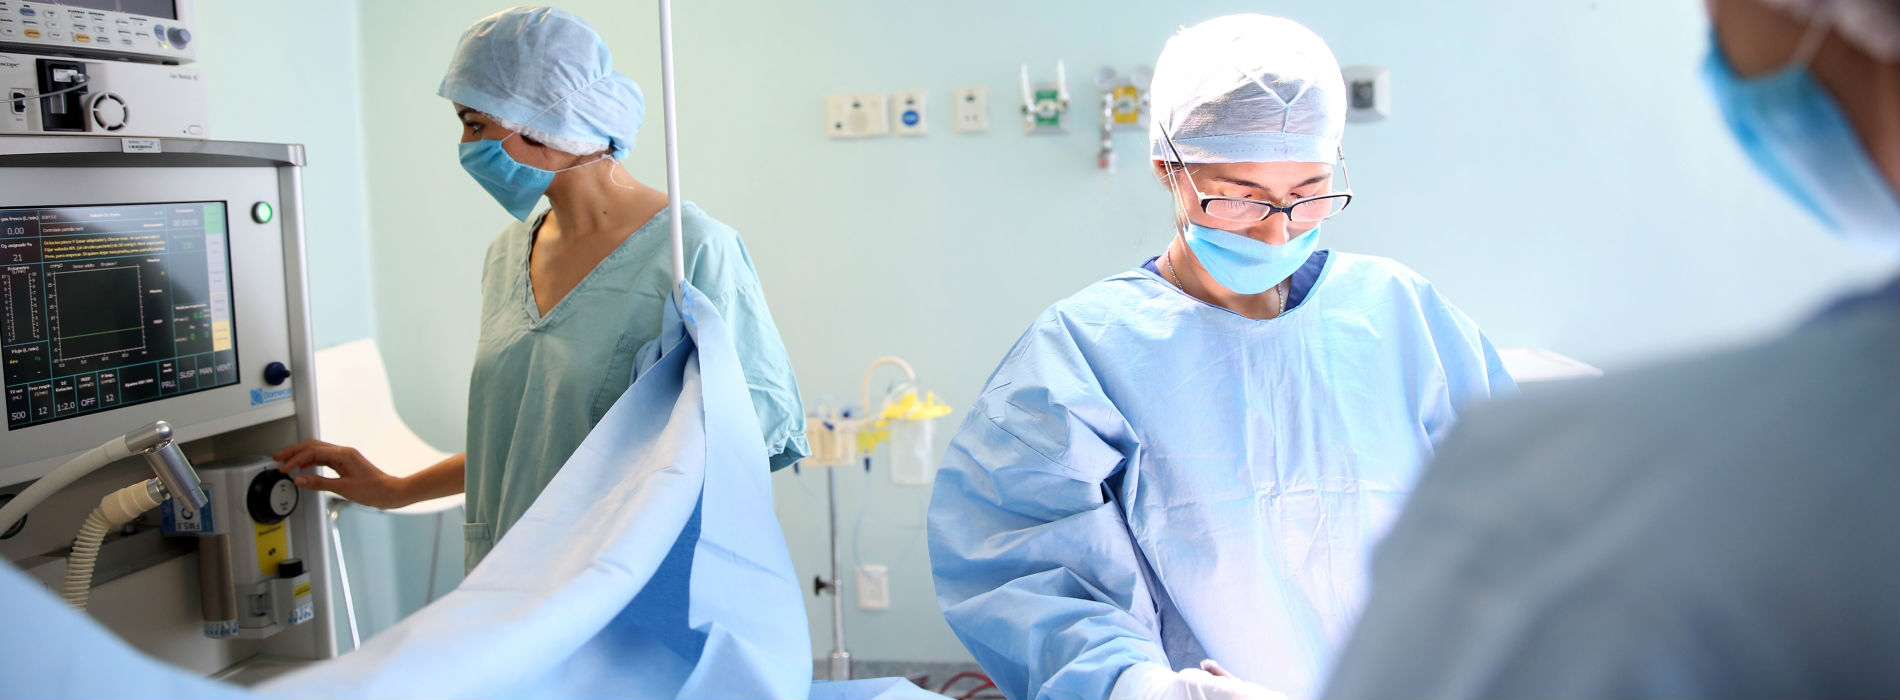 cirugia laparoscopica cancun